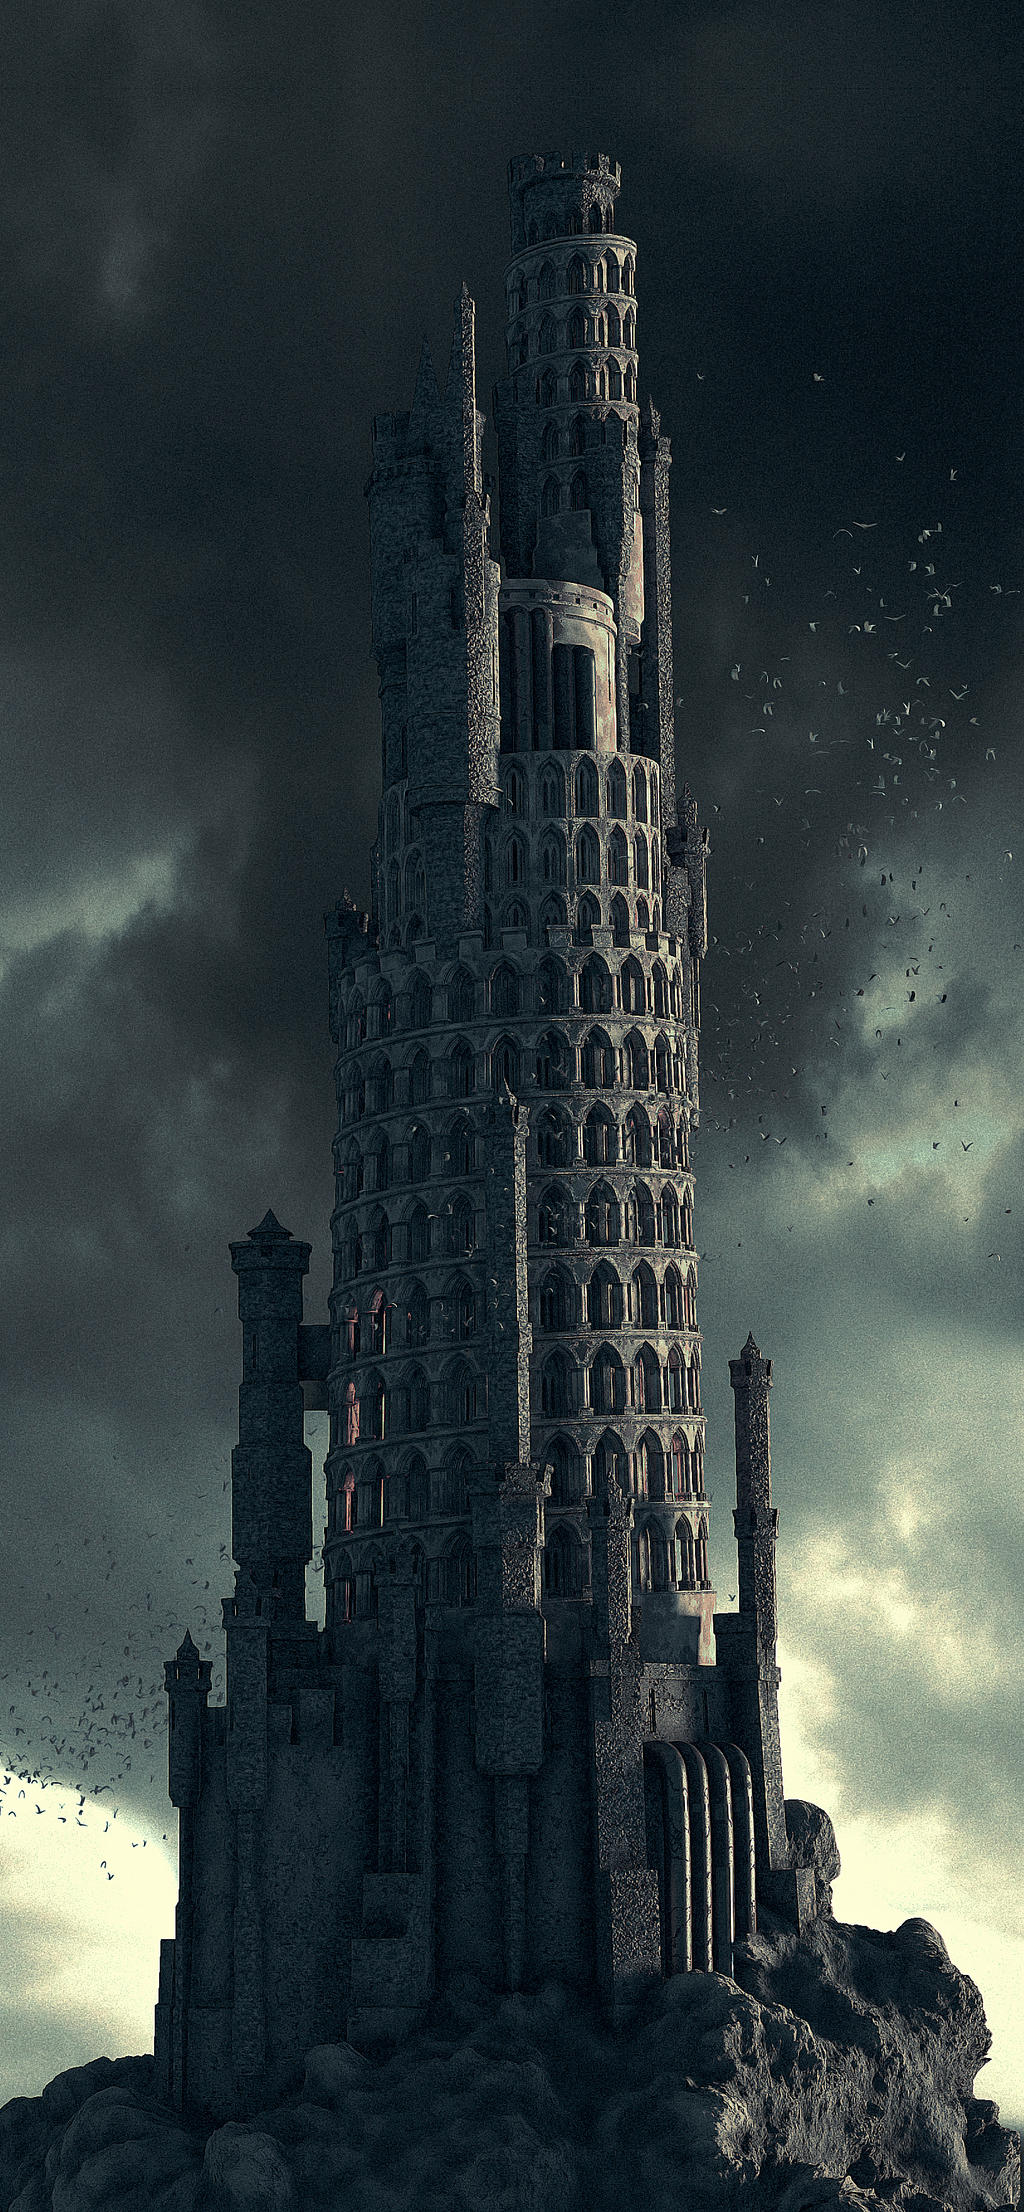 the_dark_tower_by_25kartinok-dbkwe3r.jpg